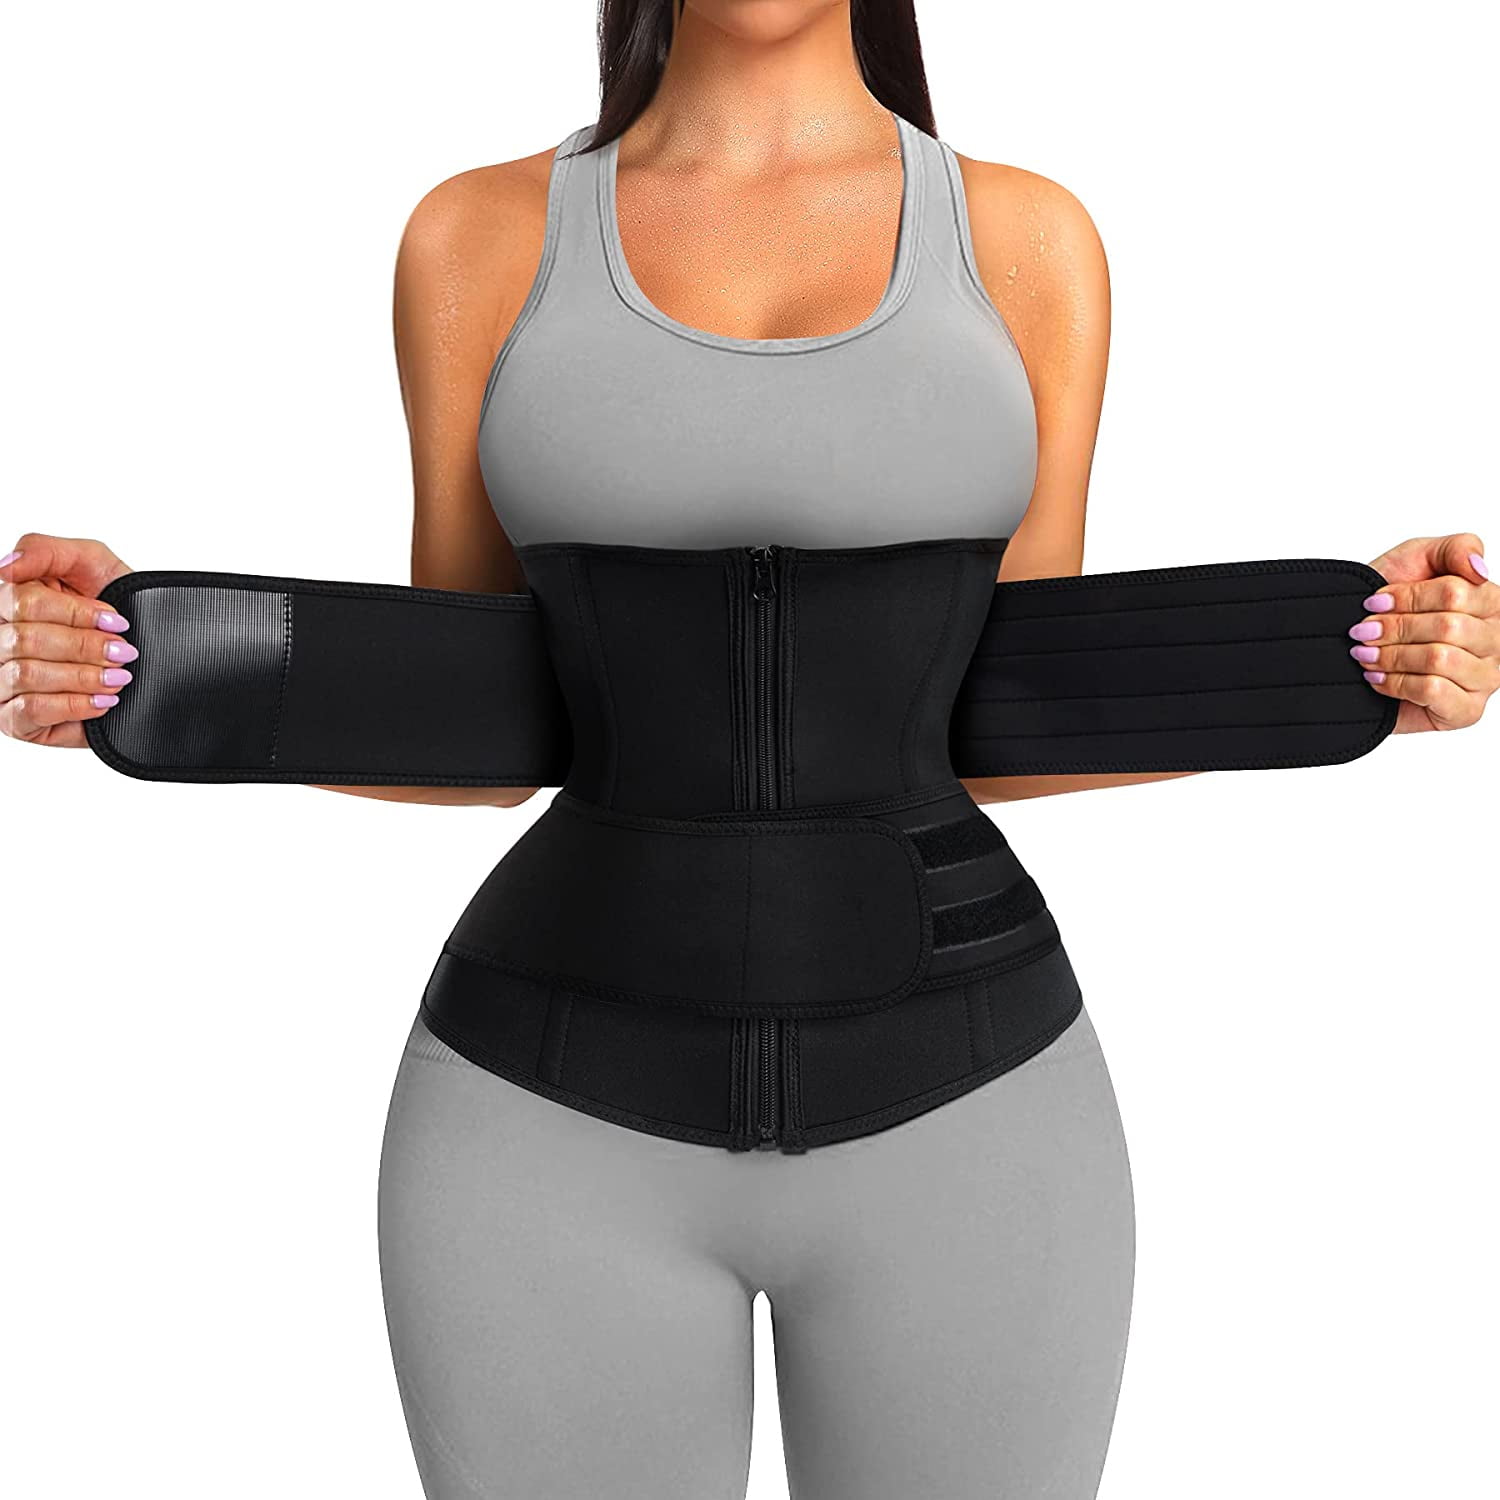 X-Large Waist Trainer for Women Zipper Corset Fat Burning Double Training Band Tummy Slimming Sweat Workout Trimmer Belt-Black 